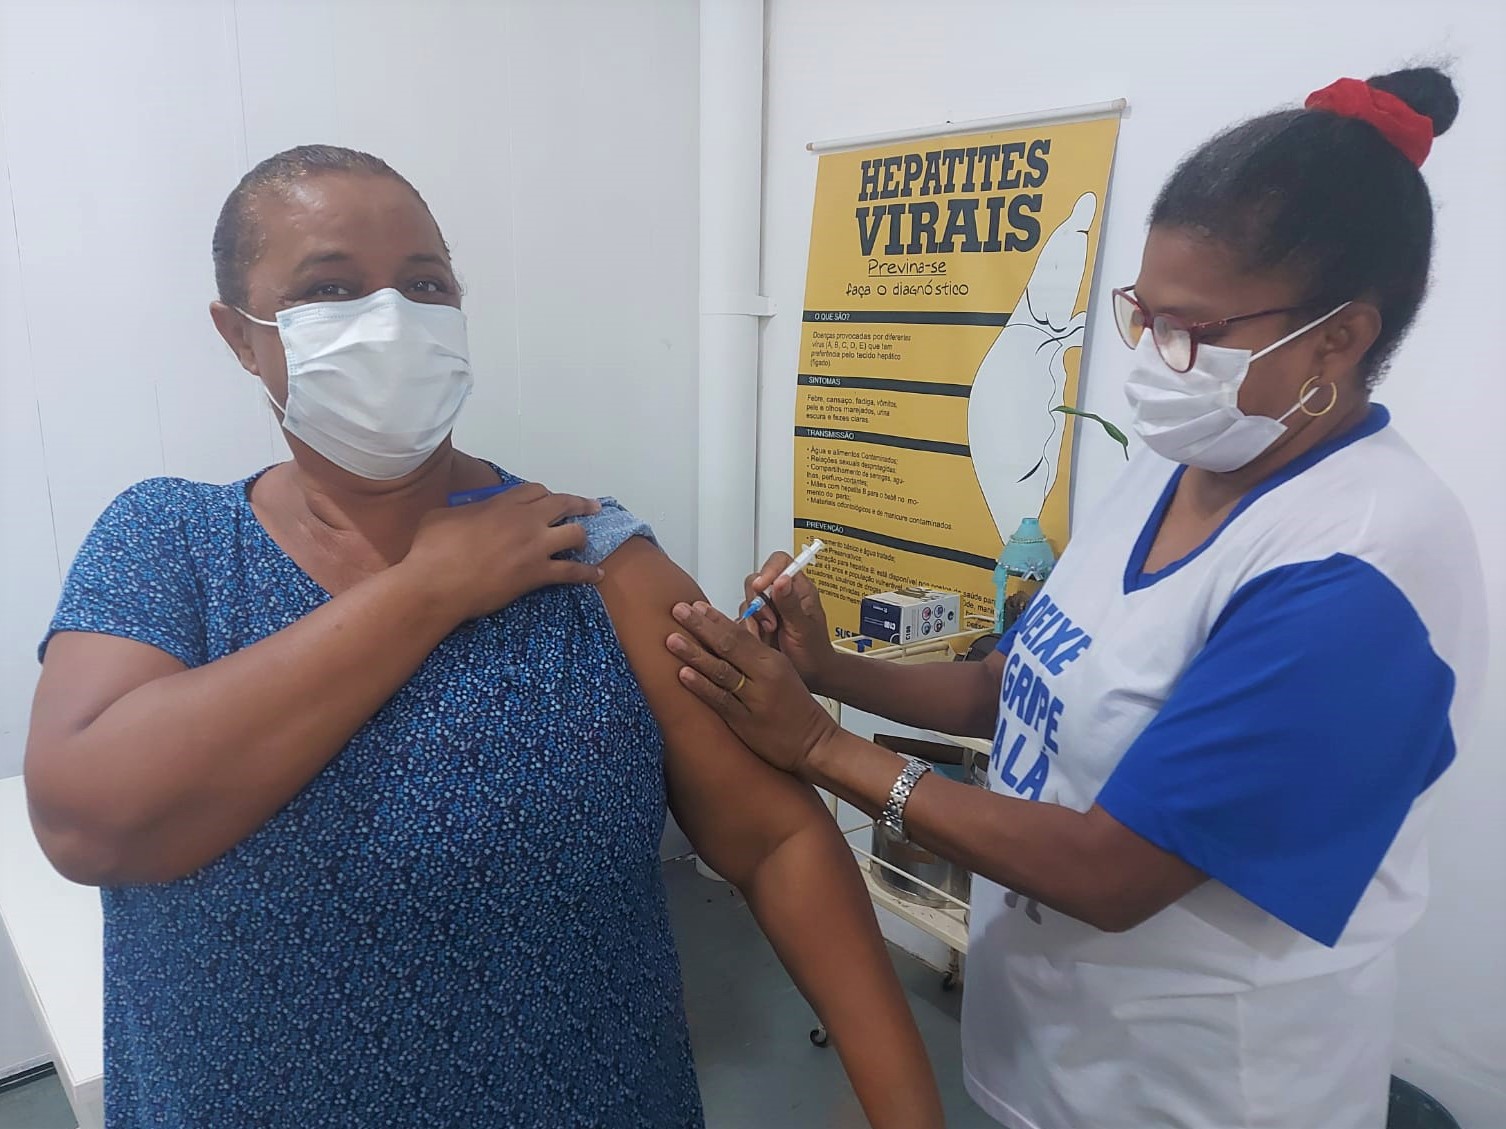 Servidora aposentada recebendo a vacina contra a gripe